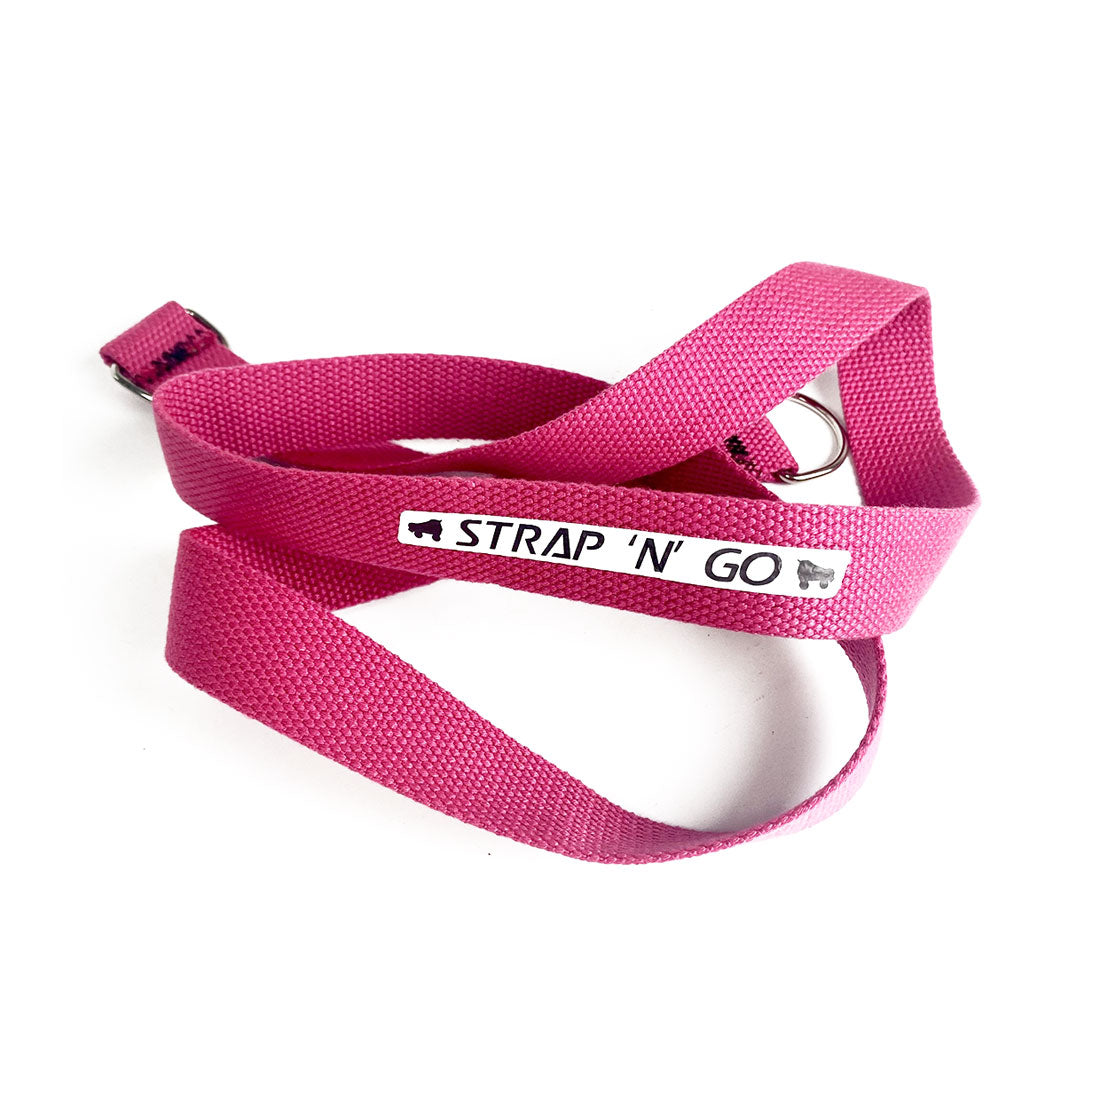 Strap N Go Skate Noose/Leash - Solid Colours Fuchsia Roller Skate Accessories